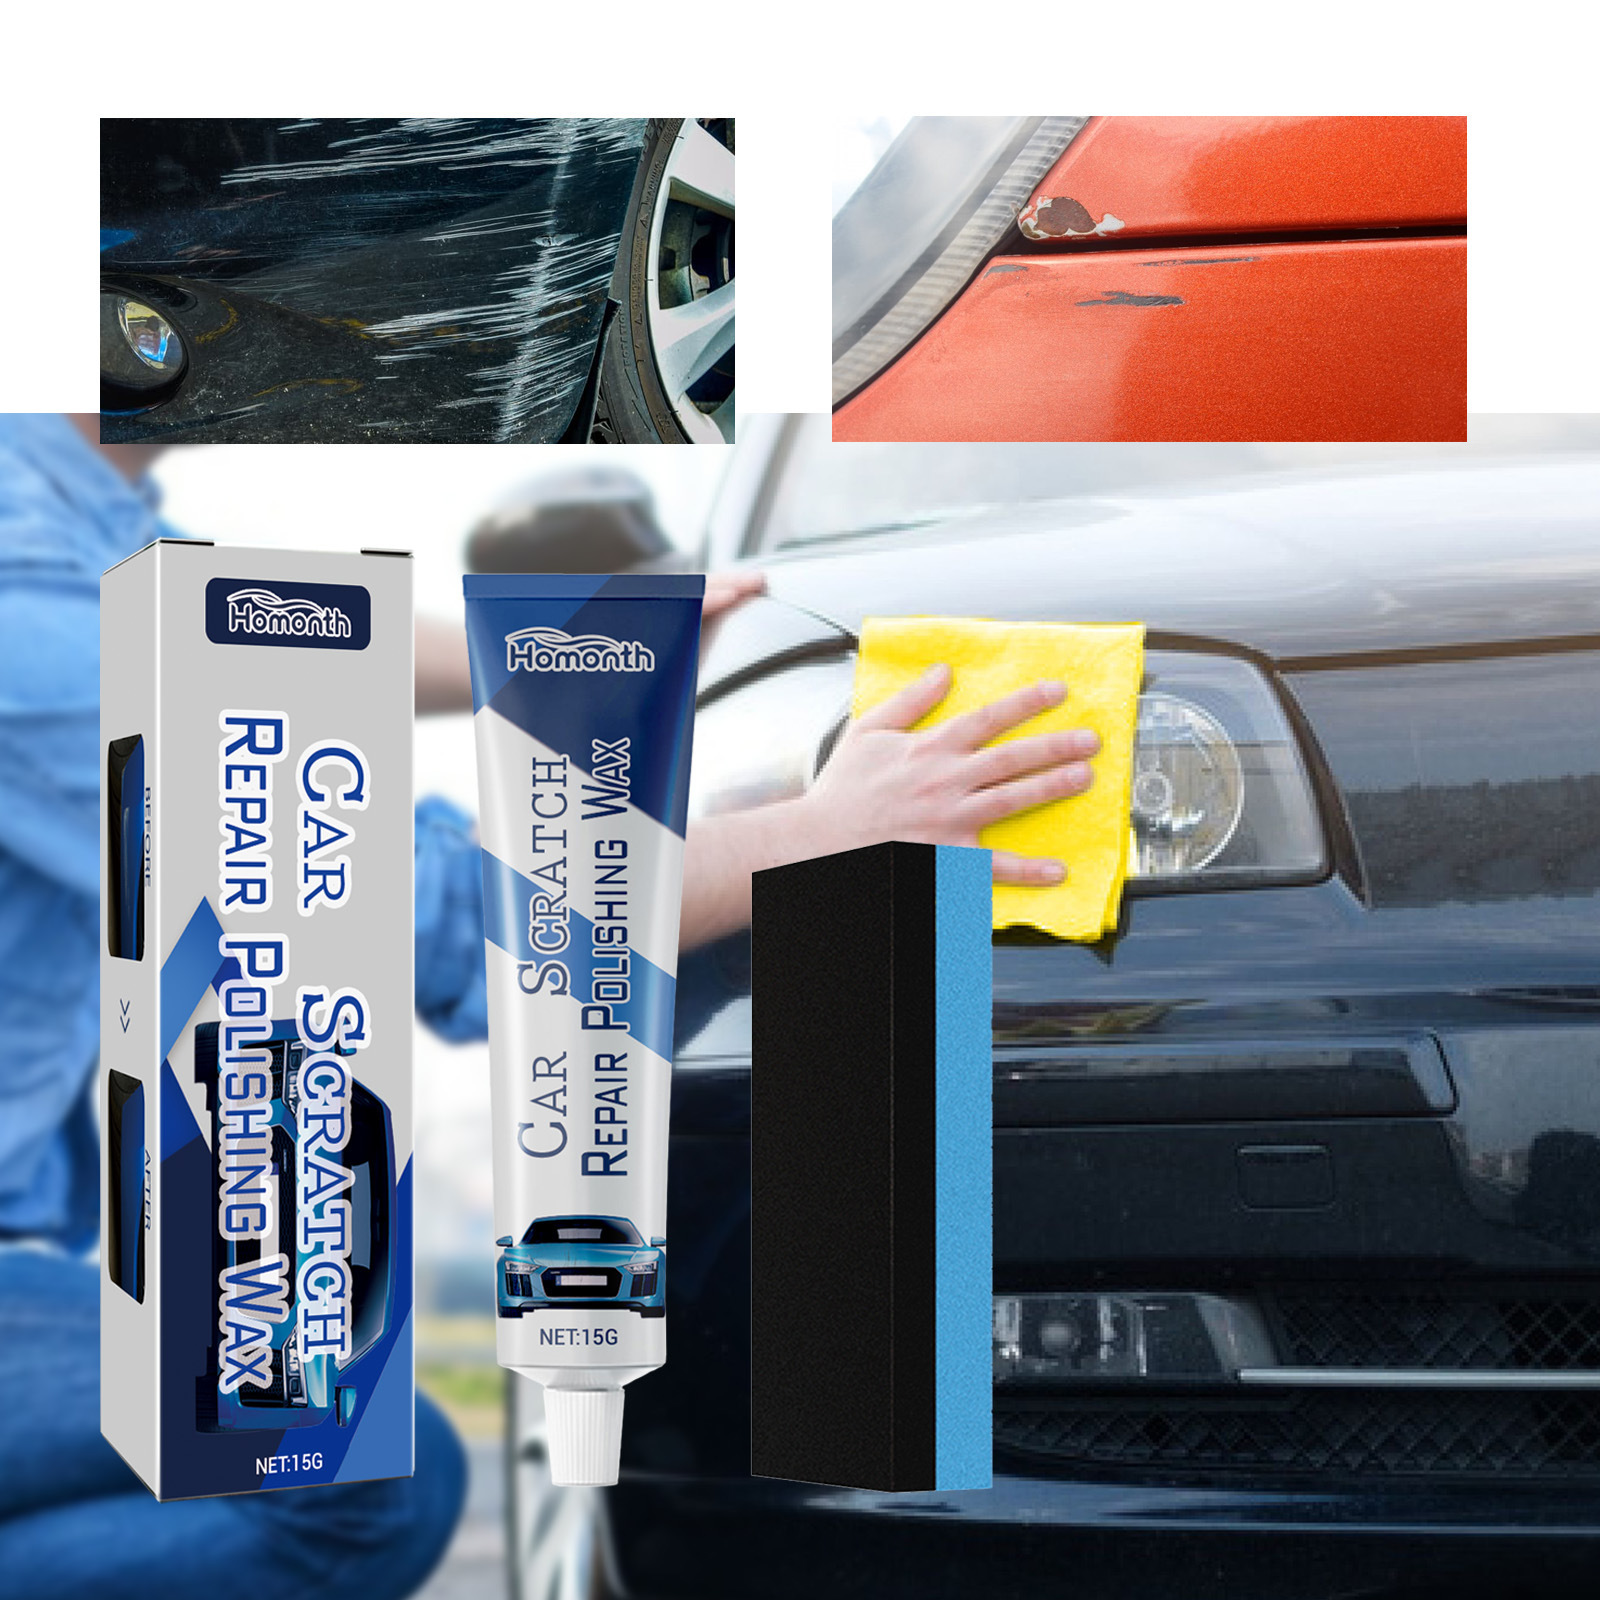 Cheap Car Paint Scratch Repair Wax Polishing Kit Scratch Repair Agent  Scratch Remover Paint Care Auto Styling Car Polish Cleaning Tool